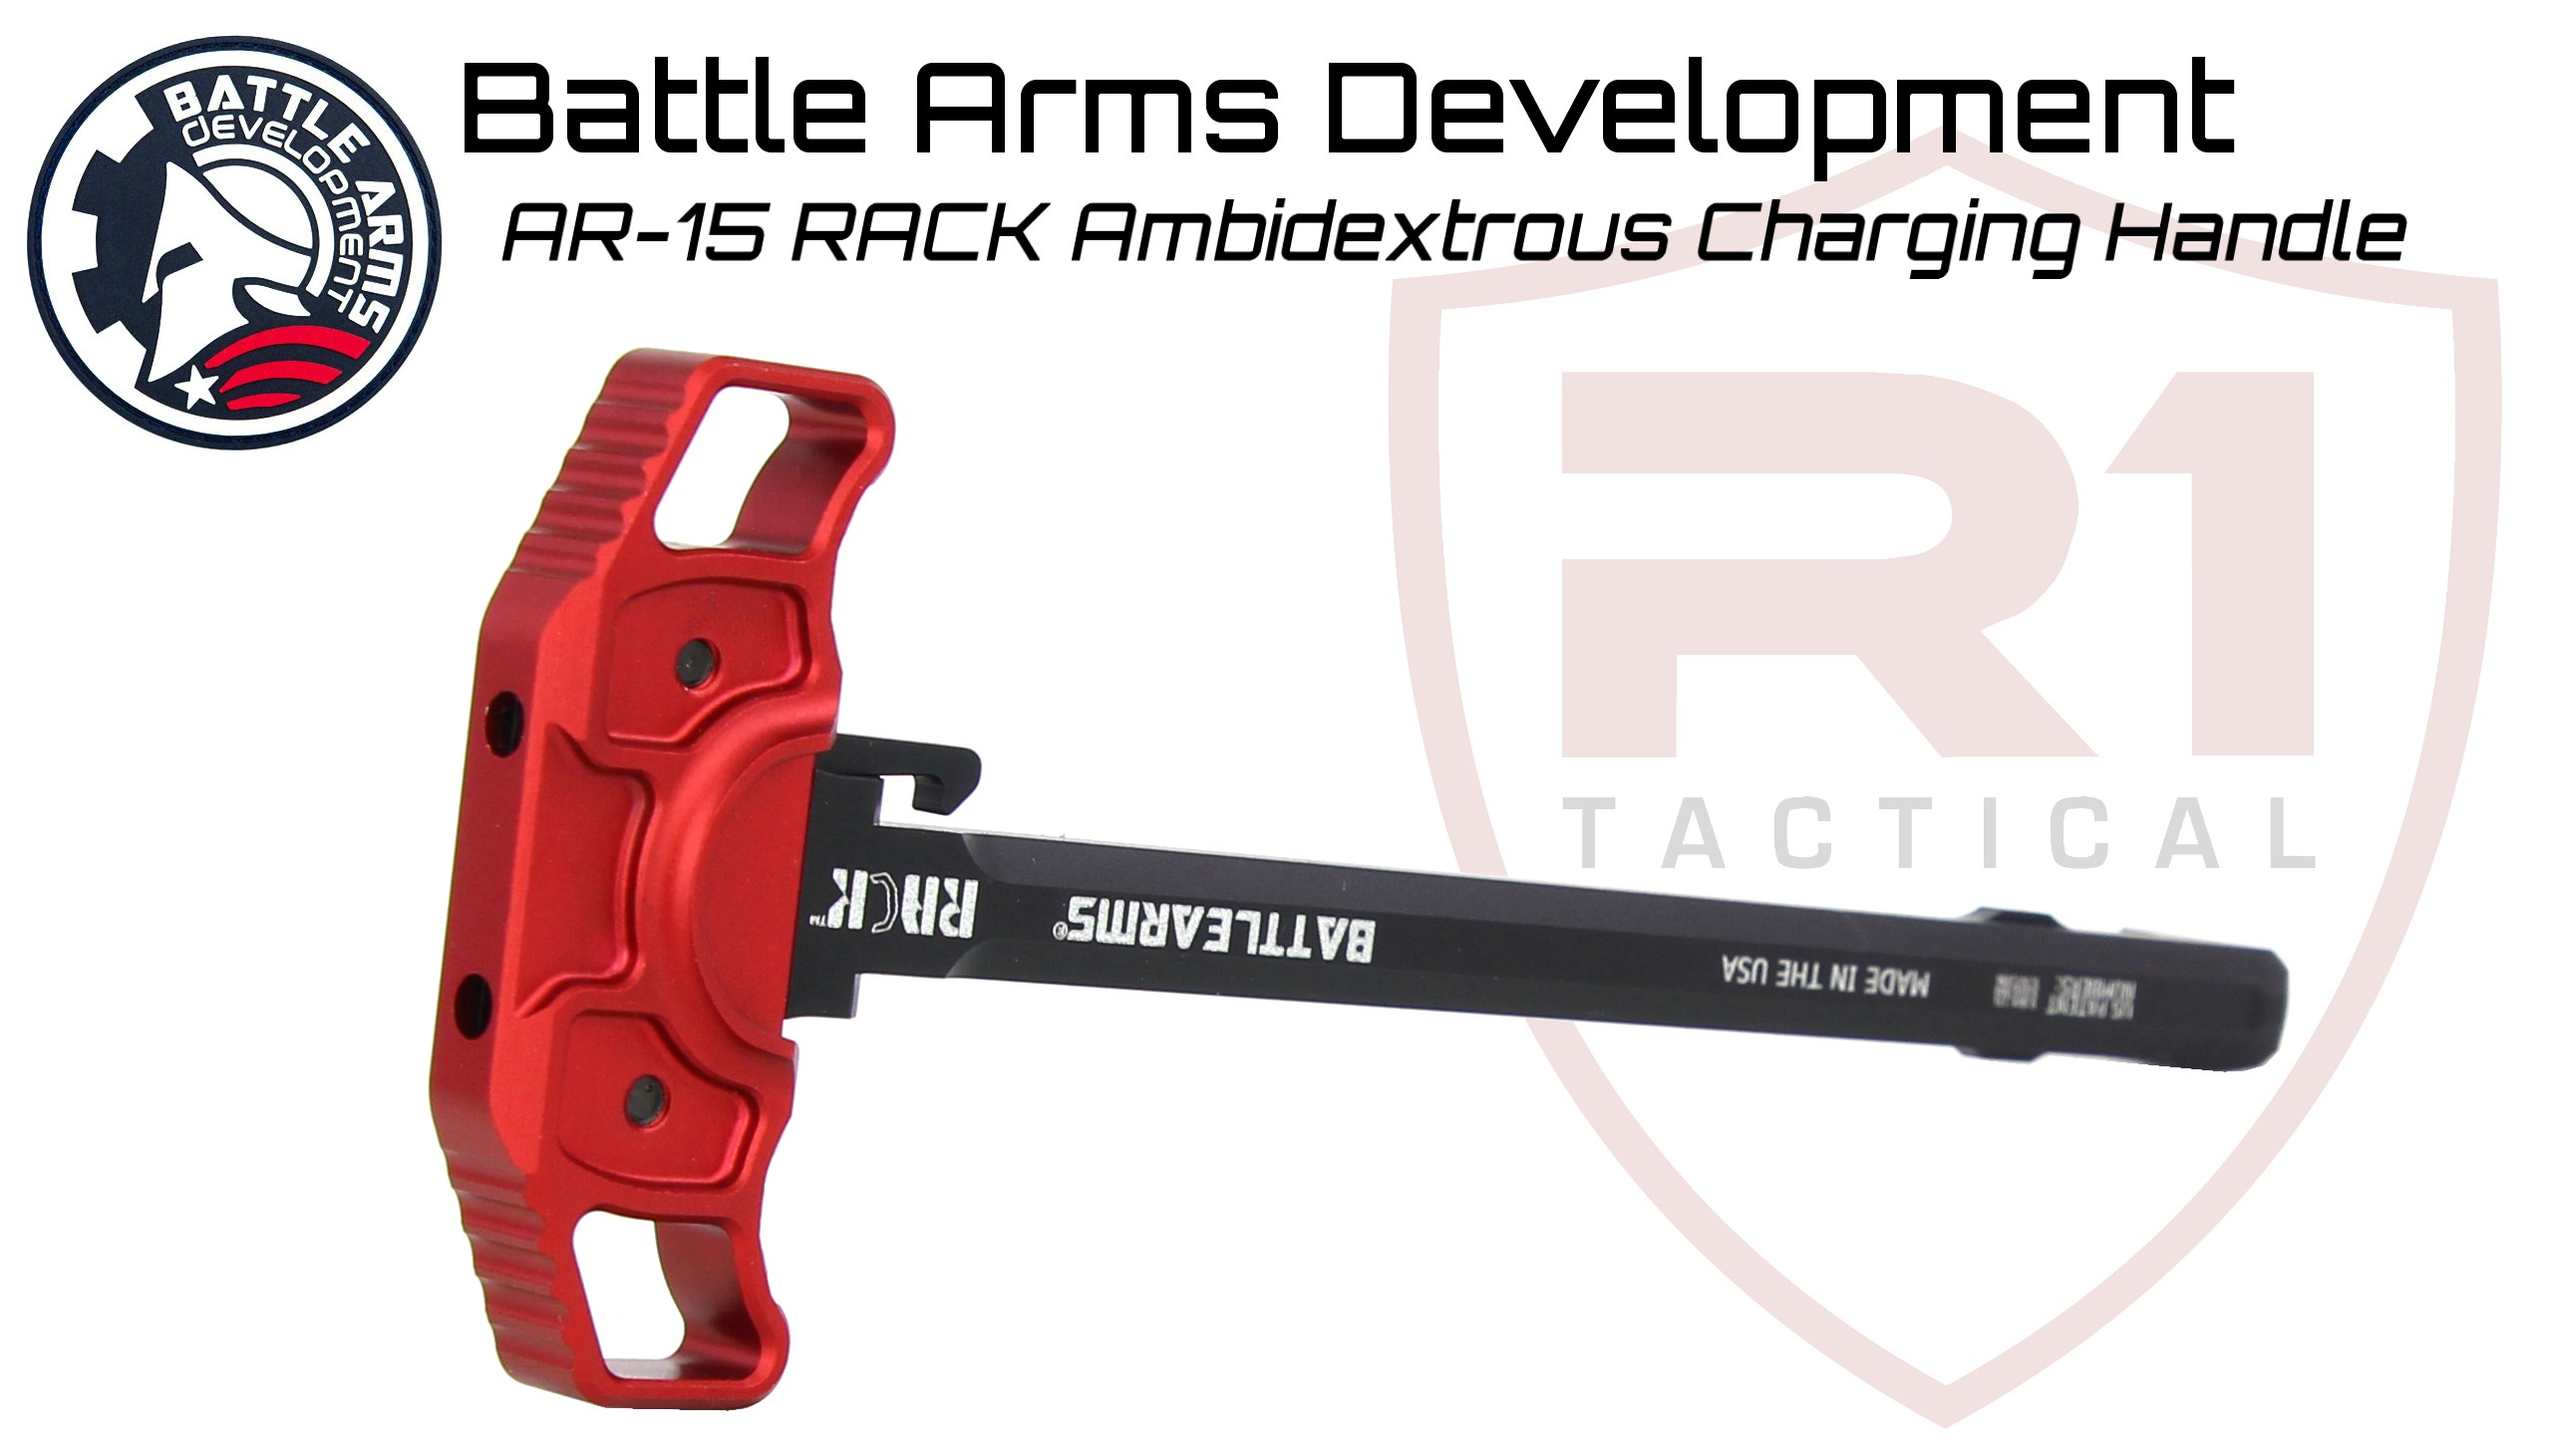 Battle Arms Development RACK Ambidextrous Charging Handle AR-15 - Red